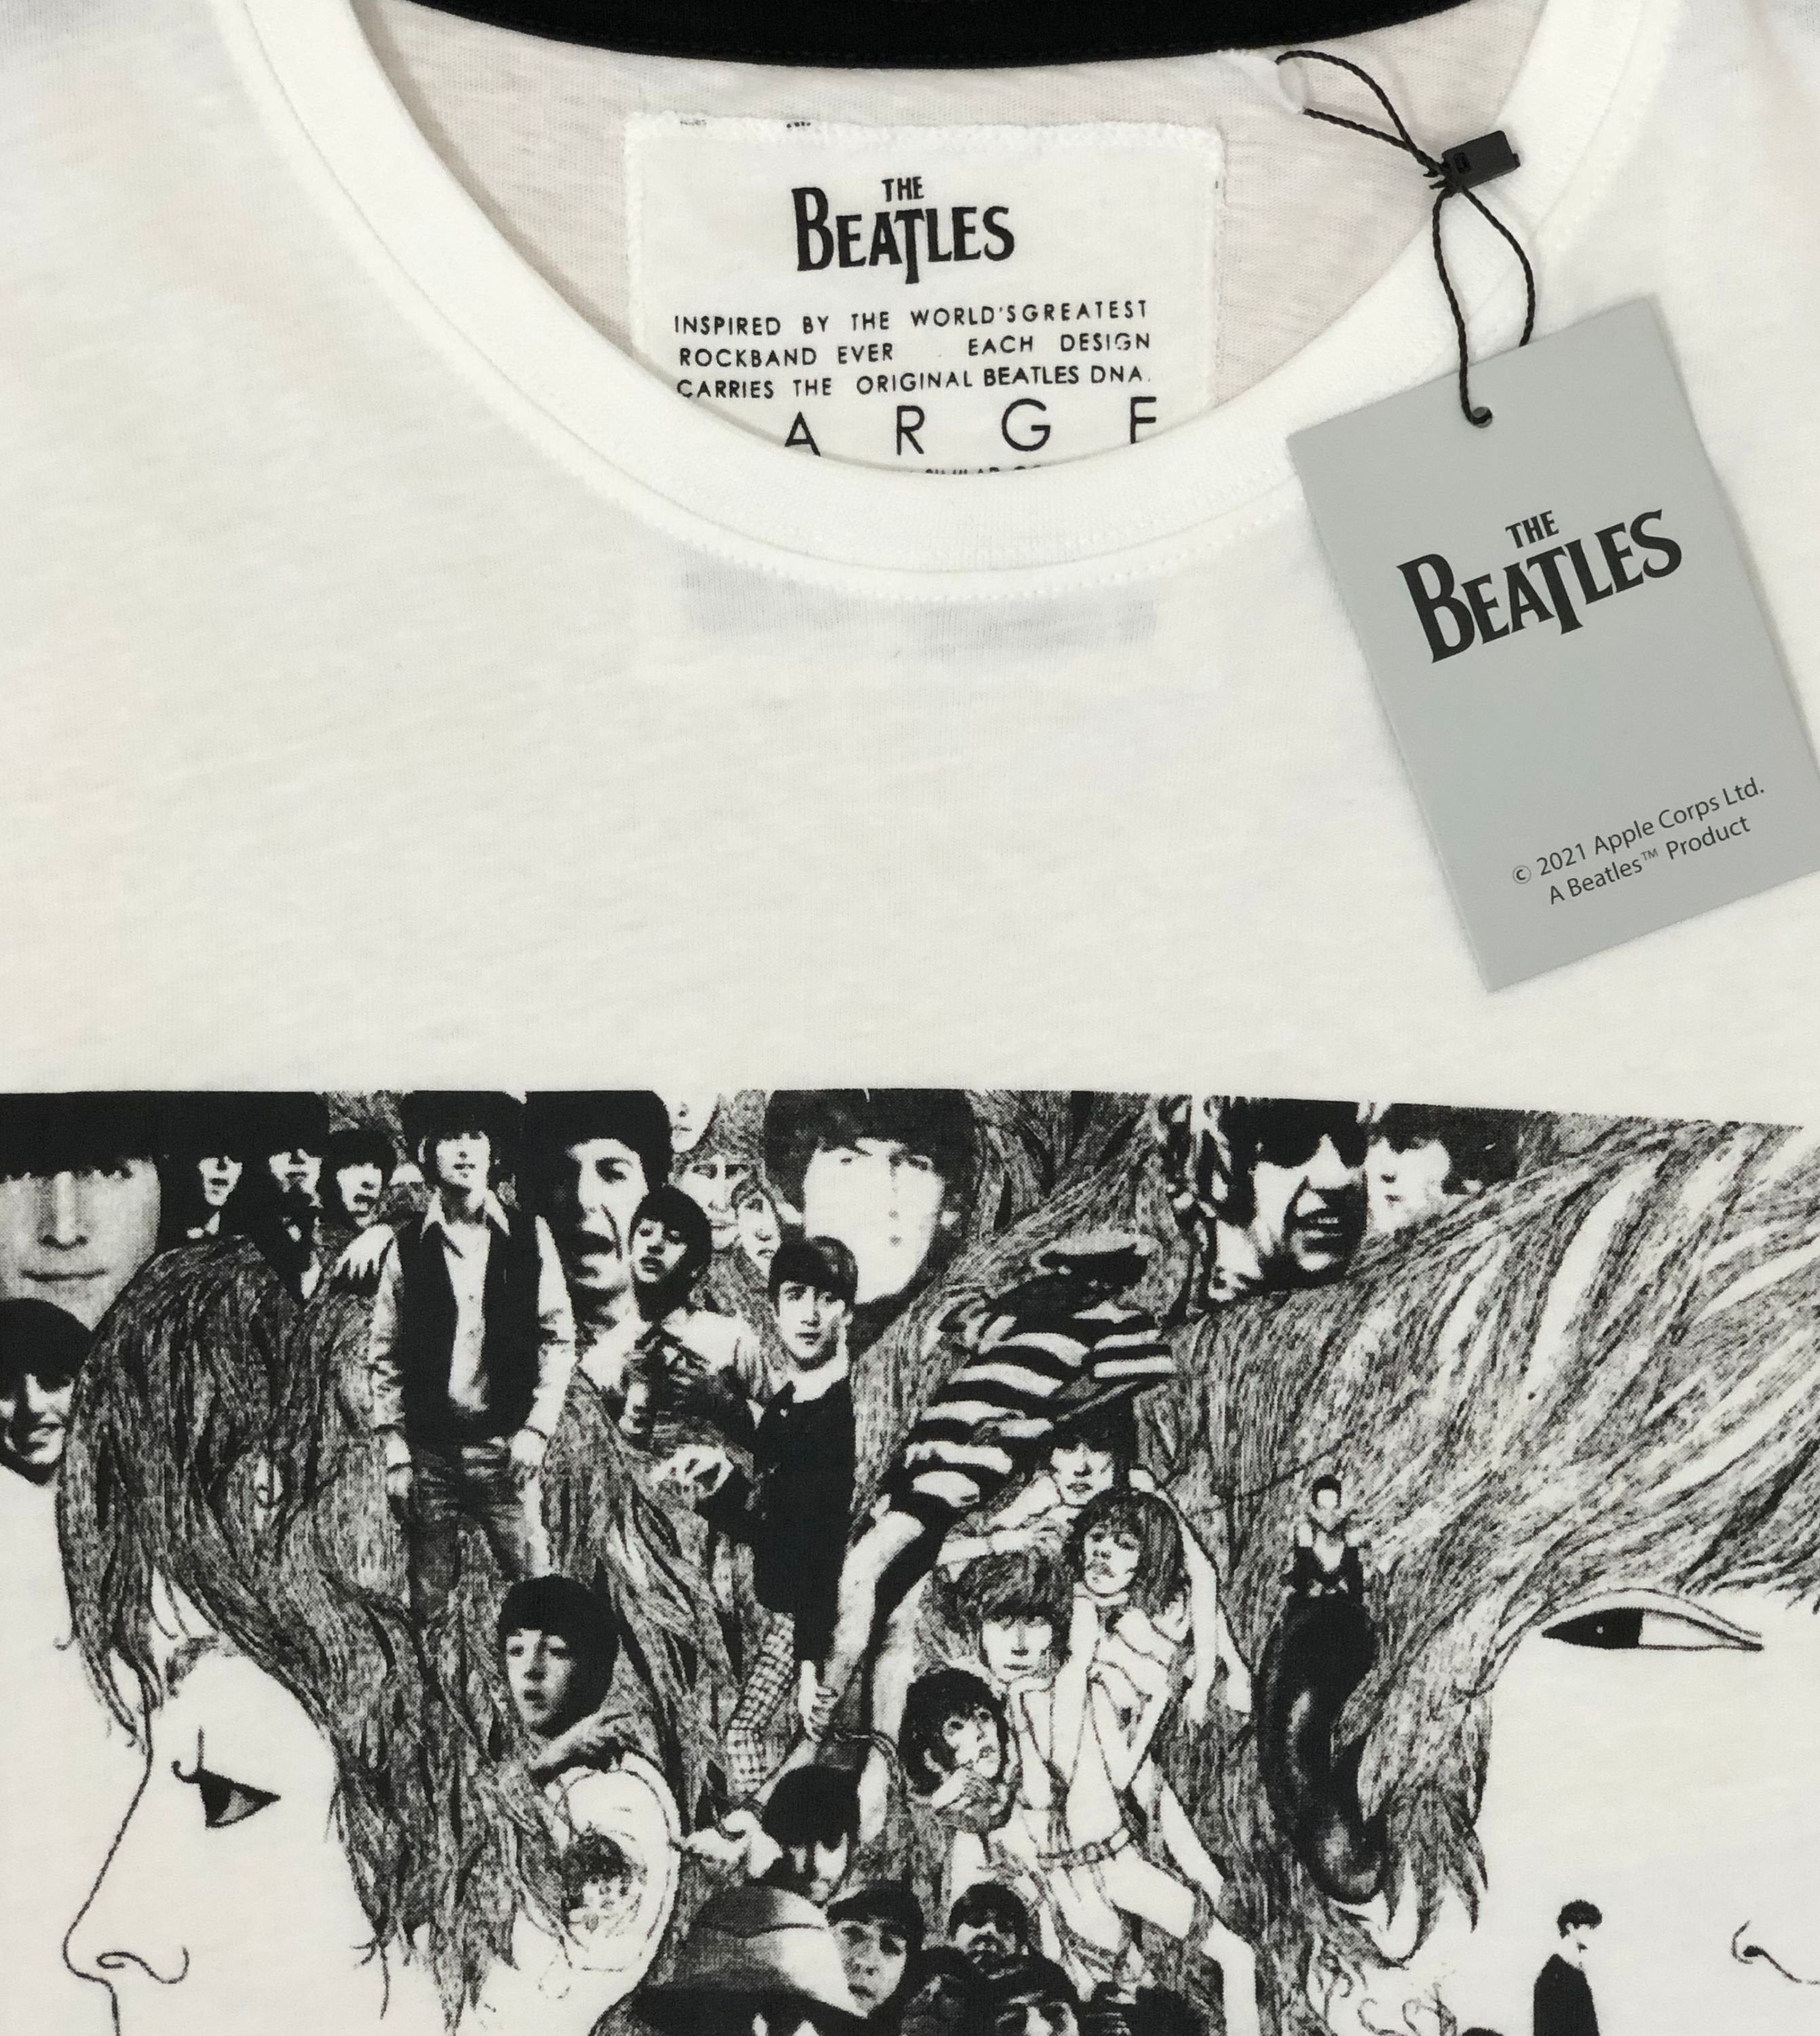 The Beatles T-Shirt "Revolver" (Stück, 1-tlg., mit Frontprint Stück)